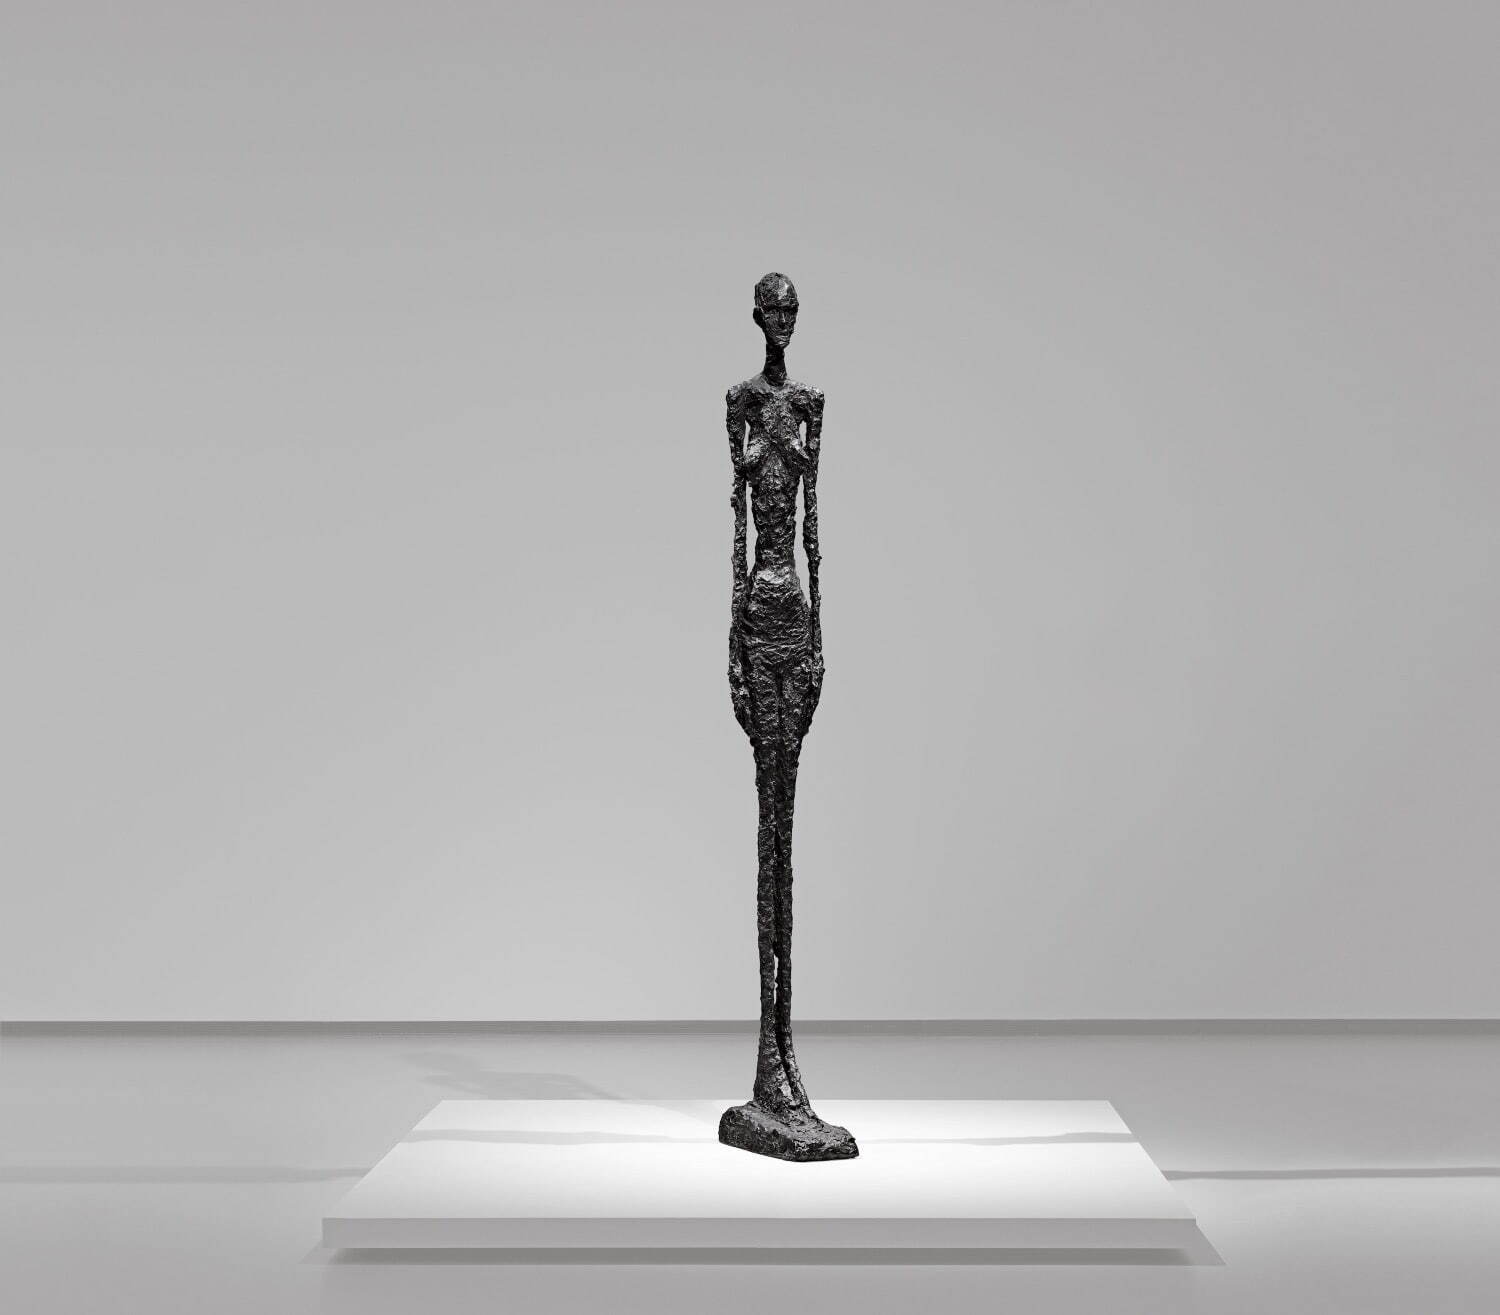 Alberto Giacometti, <i width="1500" height="1315">Grande Femme II</i>, 1960.
© Succession Alberto Giacometti/Adagp, Paris 2022.
© Fondation Louis Vuitton/Marc Domage
Courtesy of the Fondation Louis Vuitton